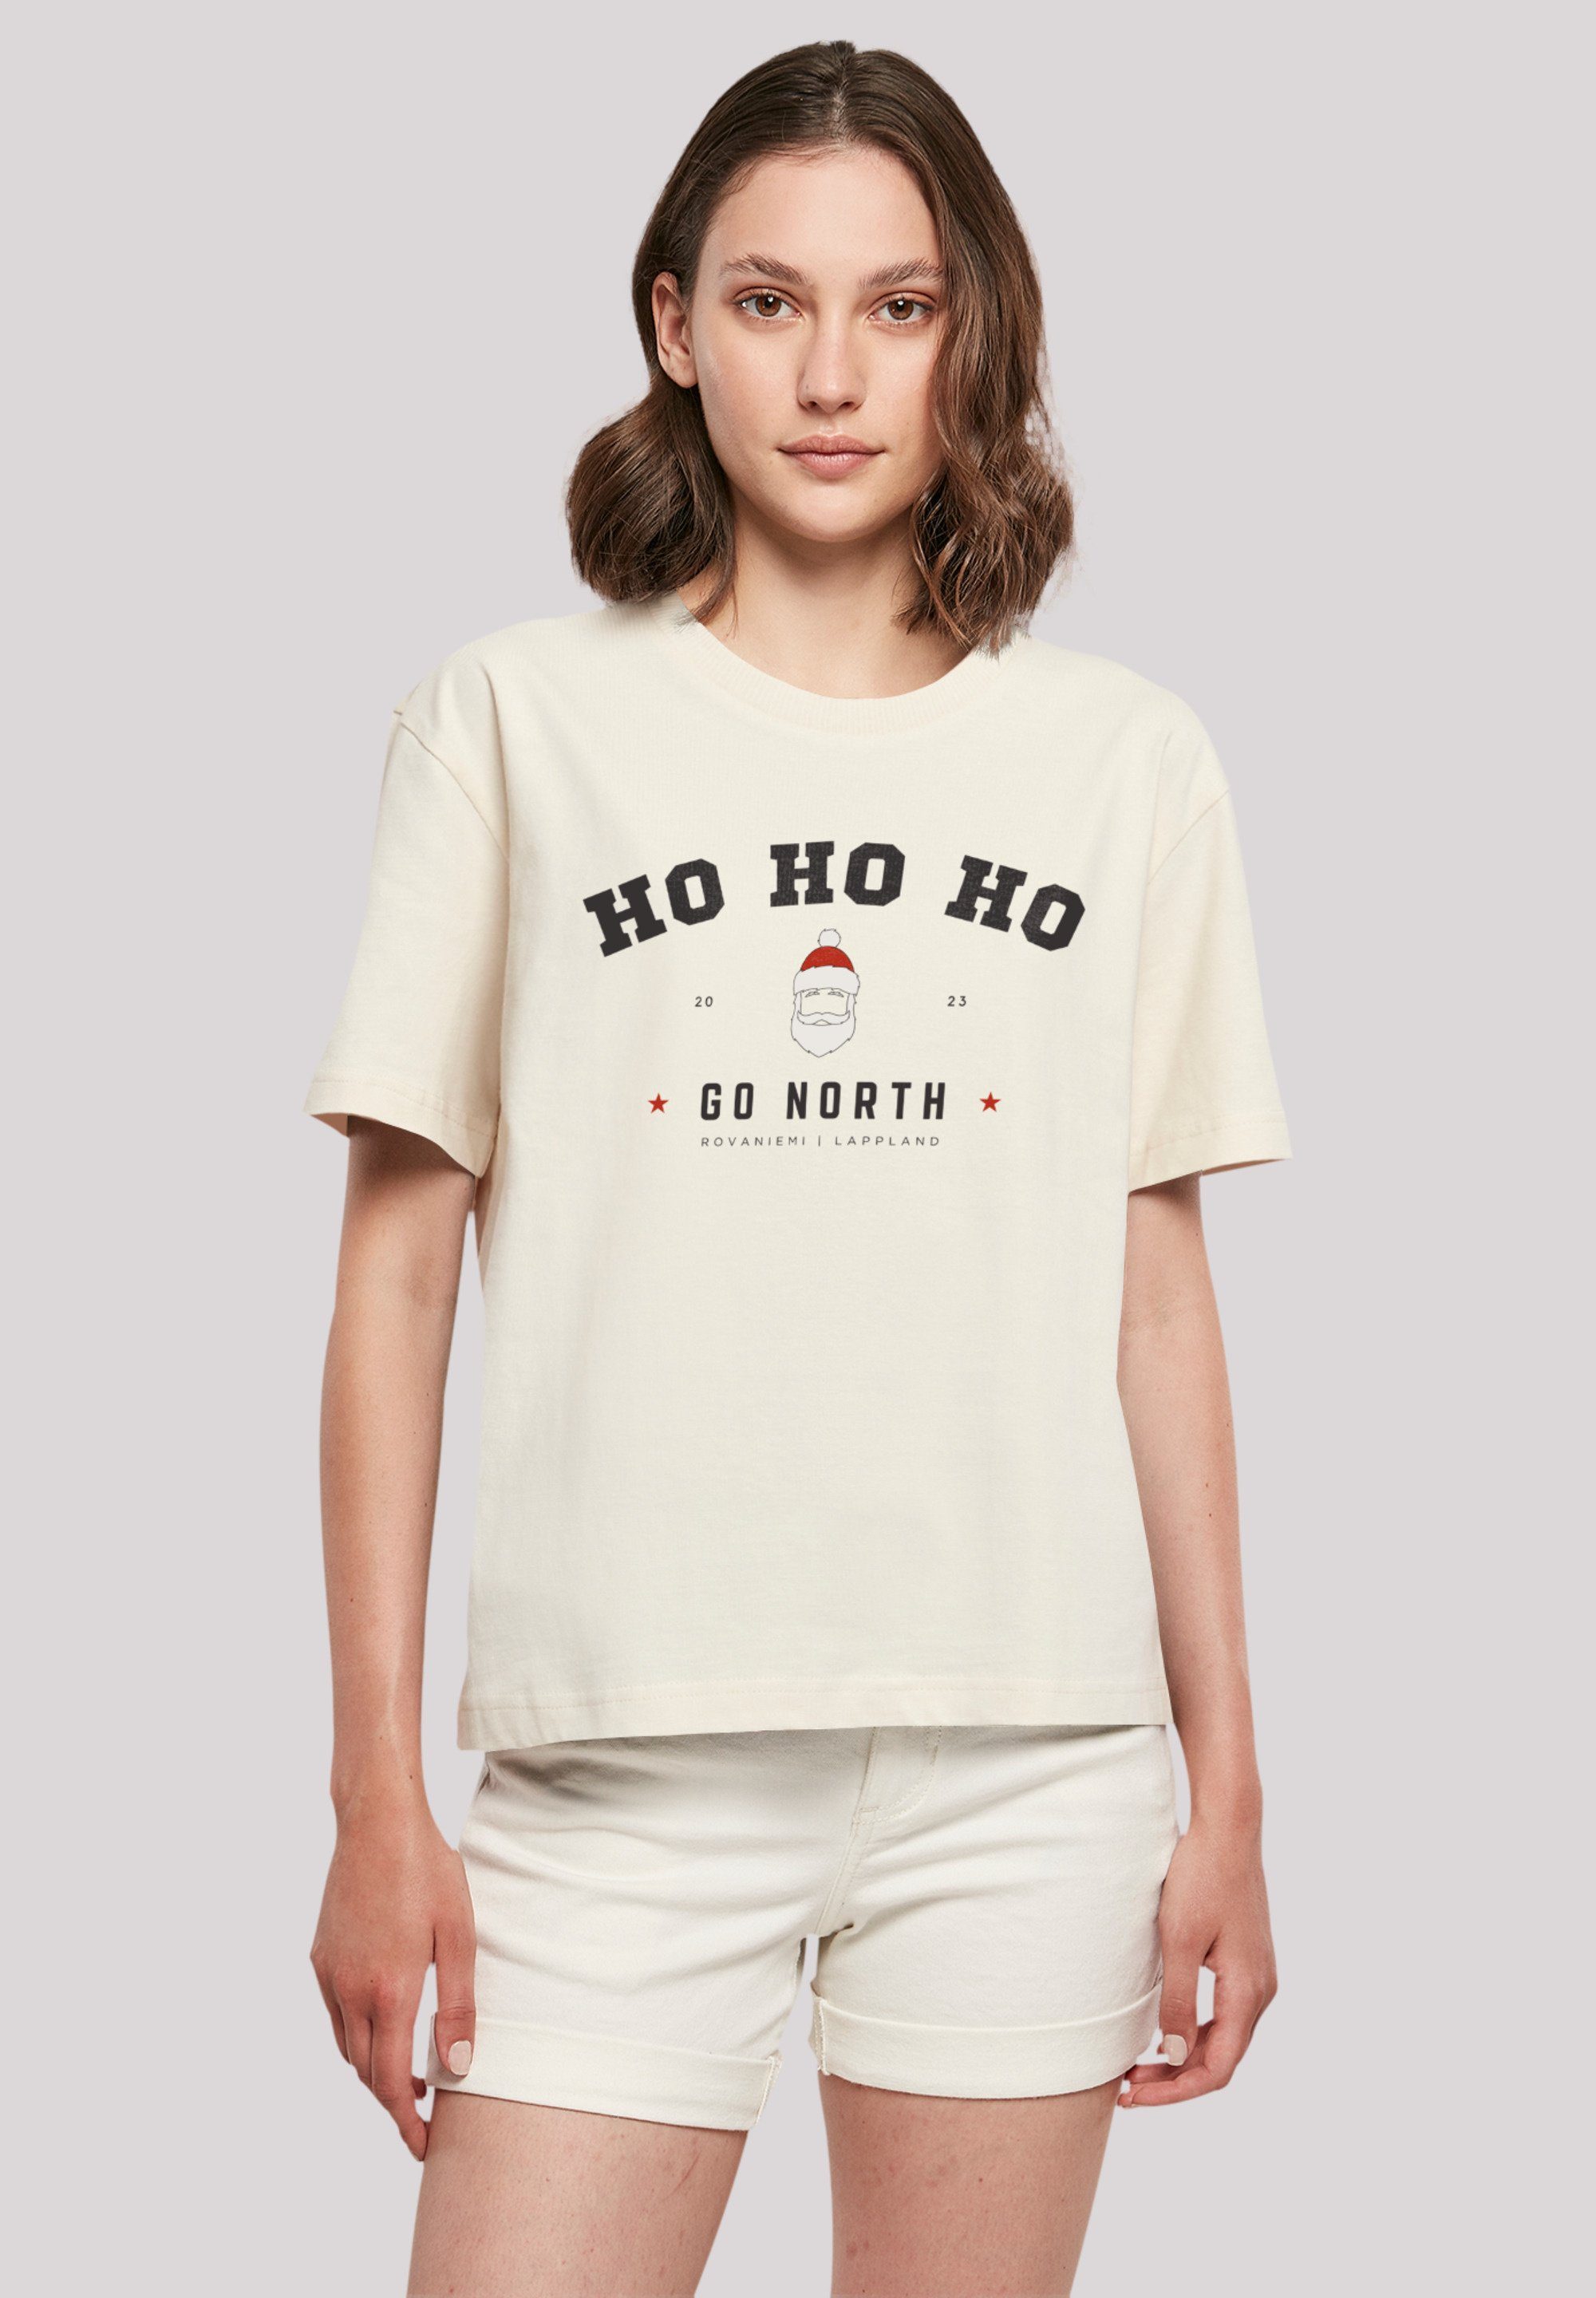 F4NT4STIC T-Shirt Ho Ho Ho Weihnachten Santa Logo, Weihnachten, Geschenk, Gerippter Rundhalsausschnitt Claus